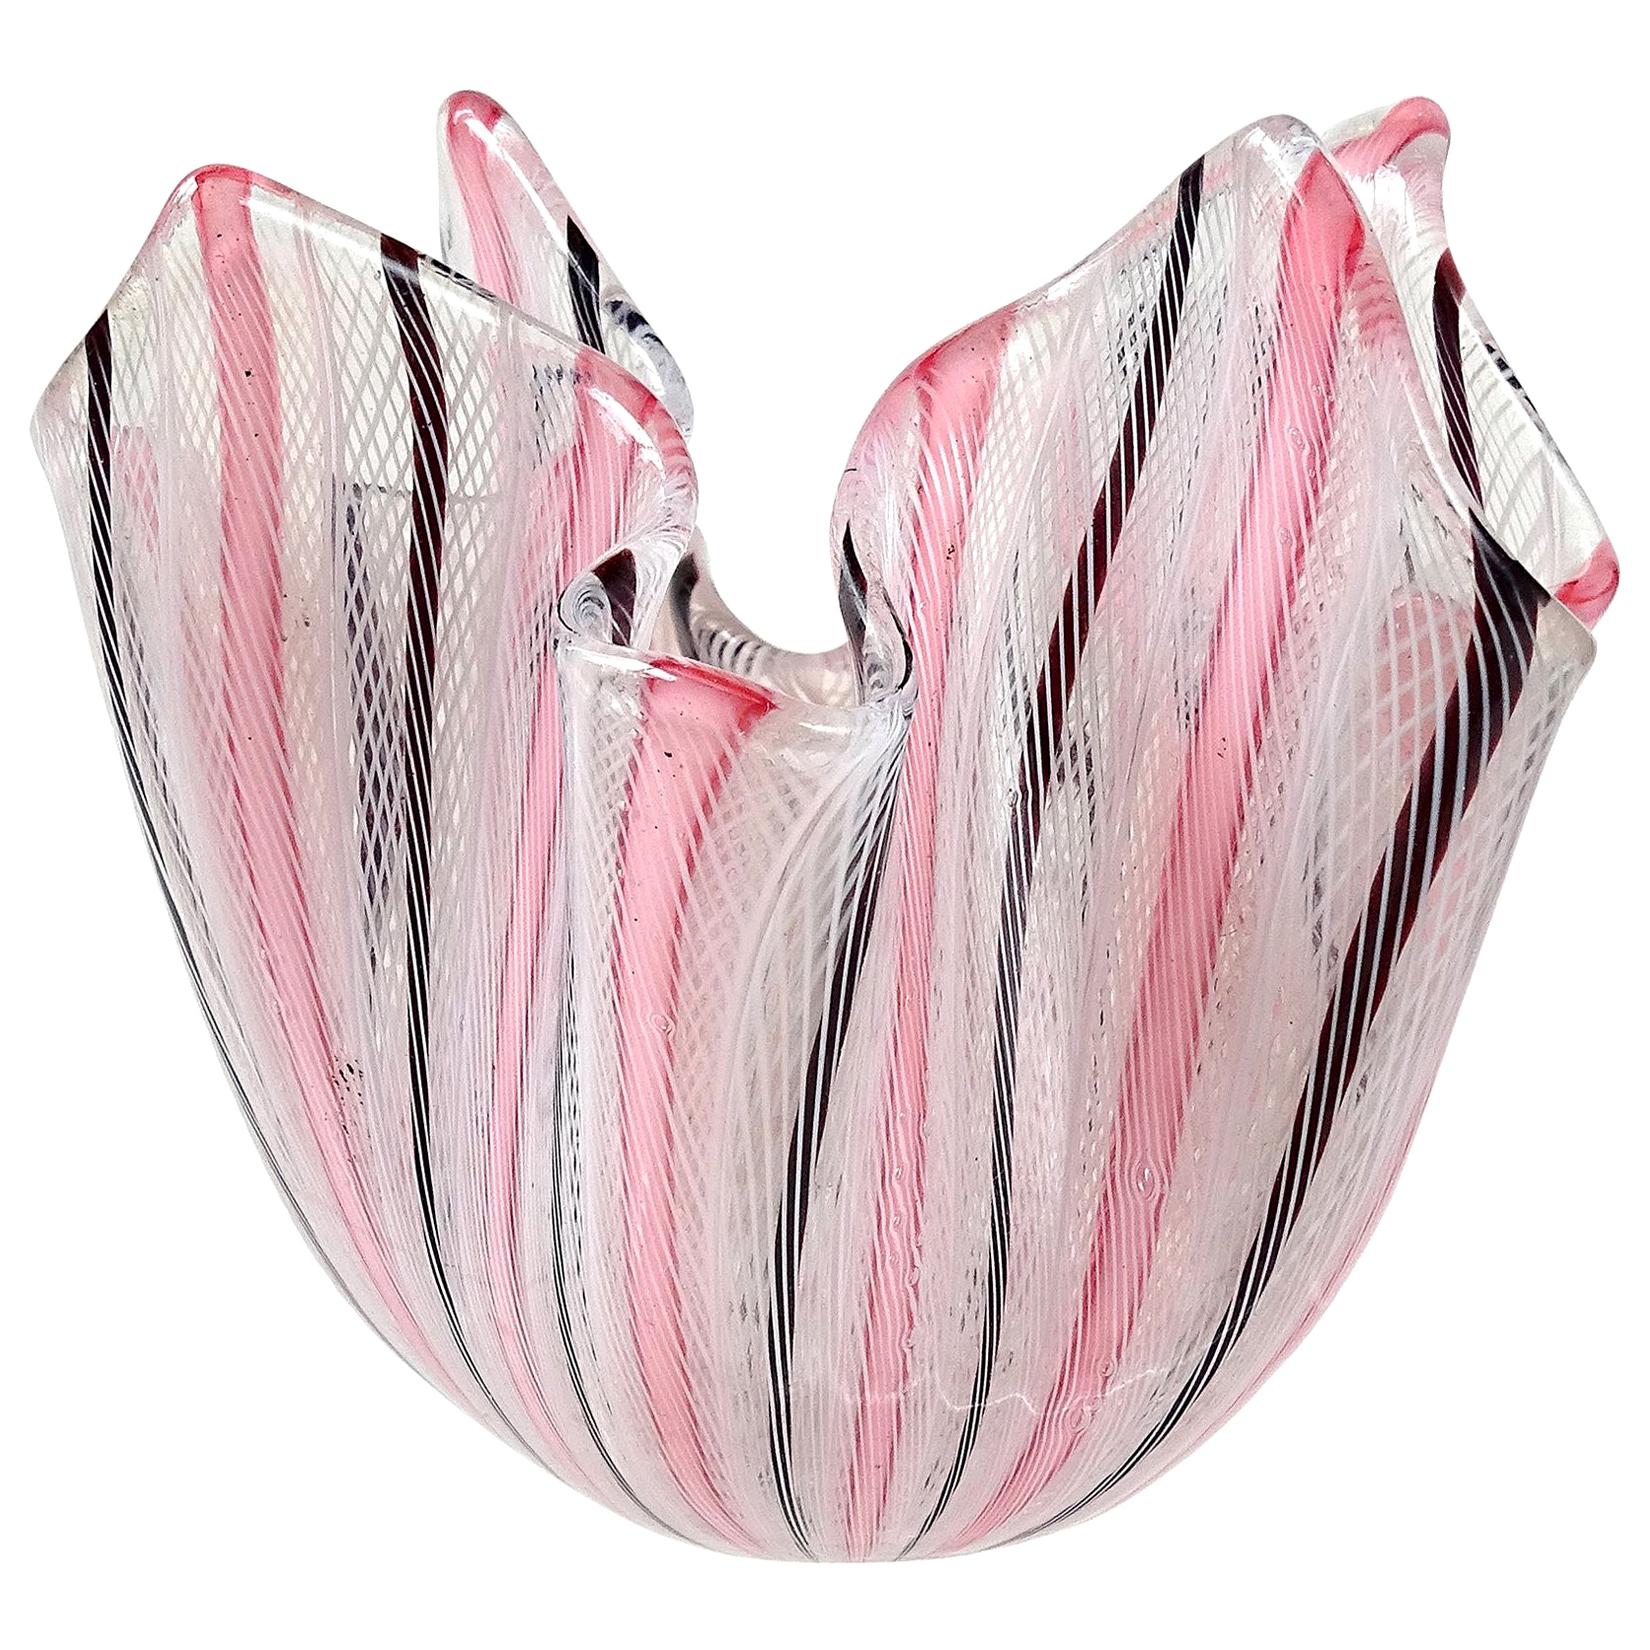 Bianconi Venini Murano Pink White Italian Art Glass Fazzoletto Handkerchief Vase